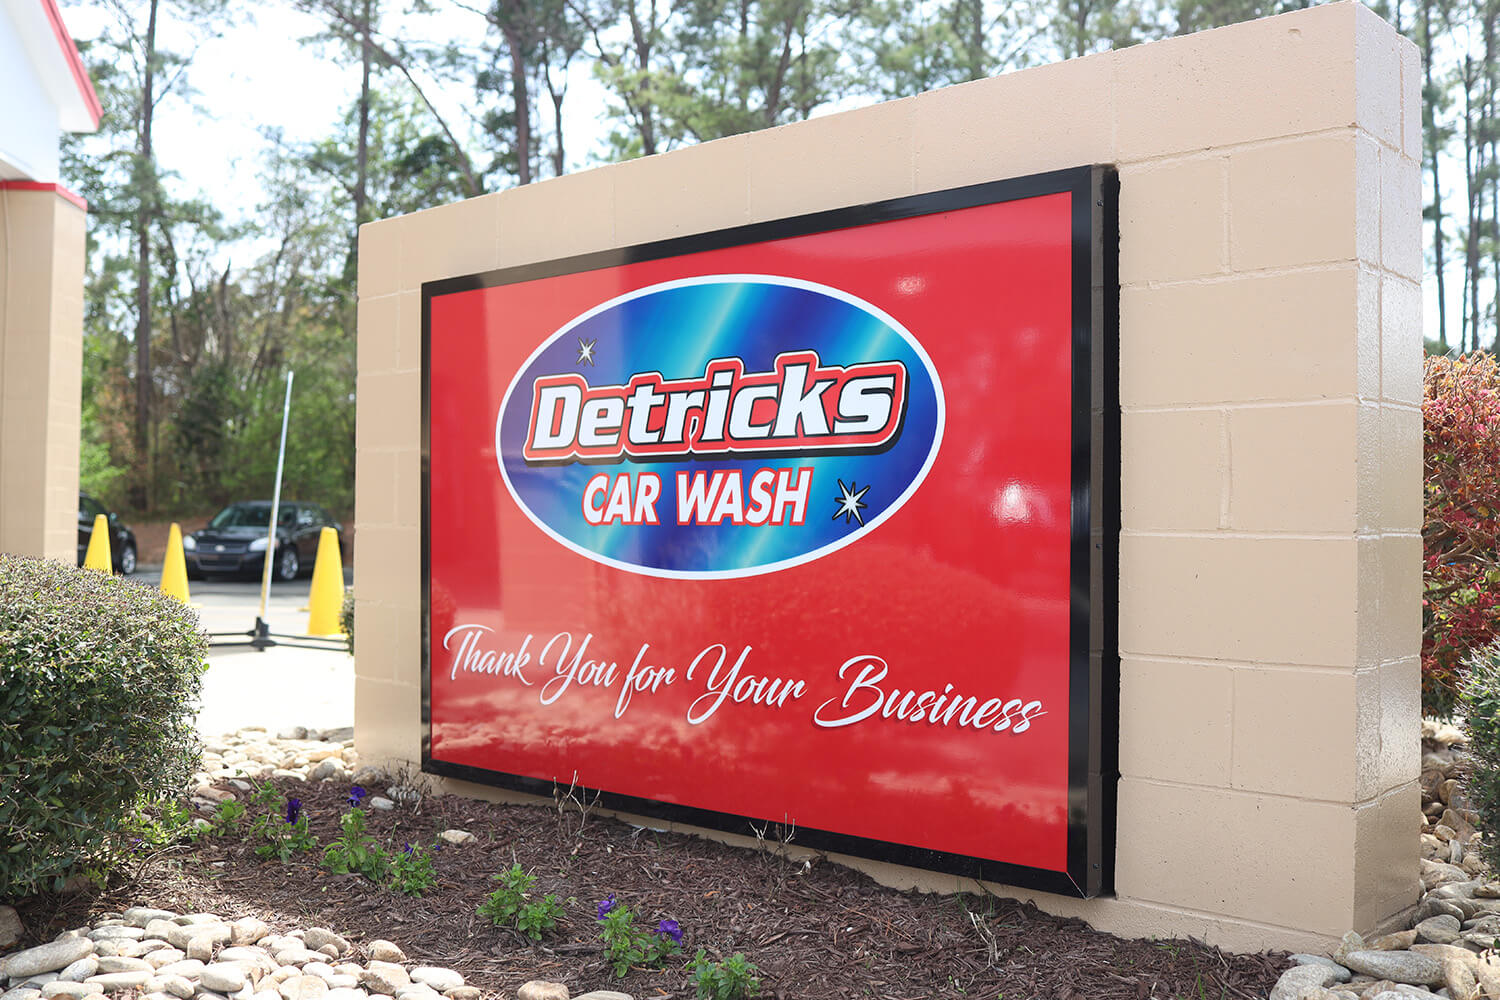 Detrick’s Car Wash sign in South Carolina